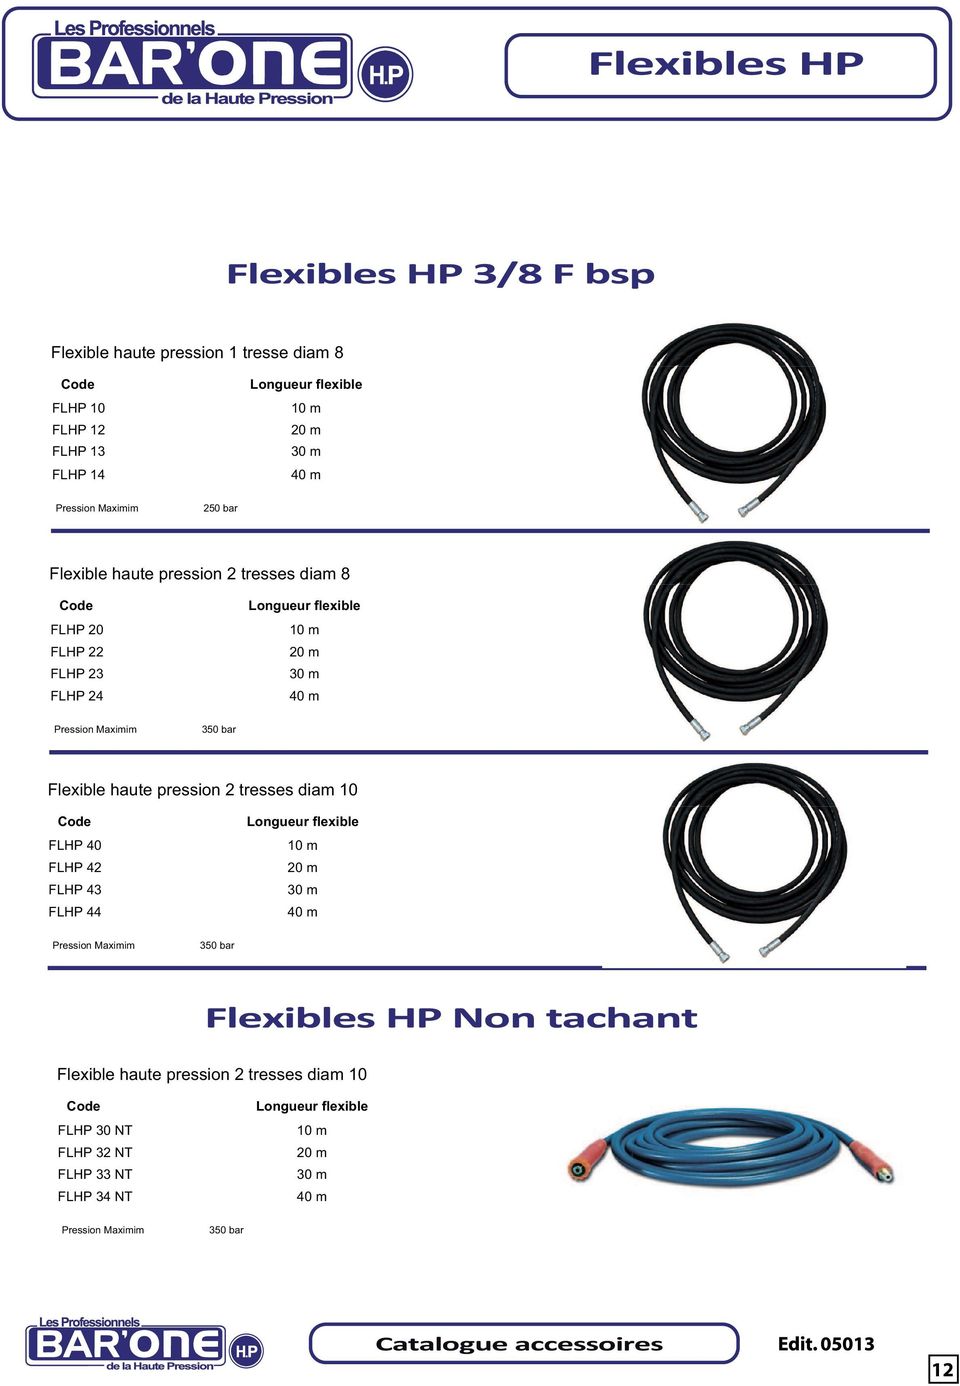 m Flexible haute pression 2 tresses diam 10 FLHP 40 FLHP 42 FLHP 43 FLHP 44 10 m 30 m 40 m Flexibles HP Non